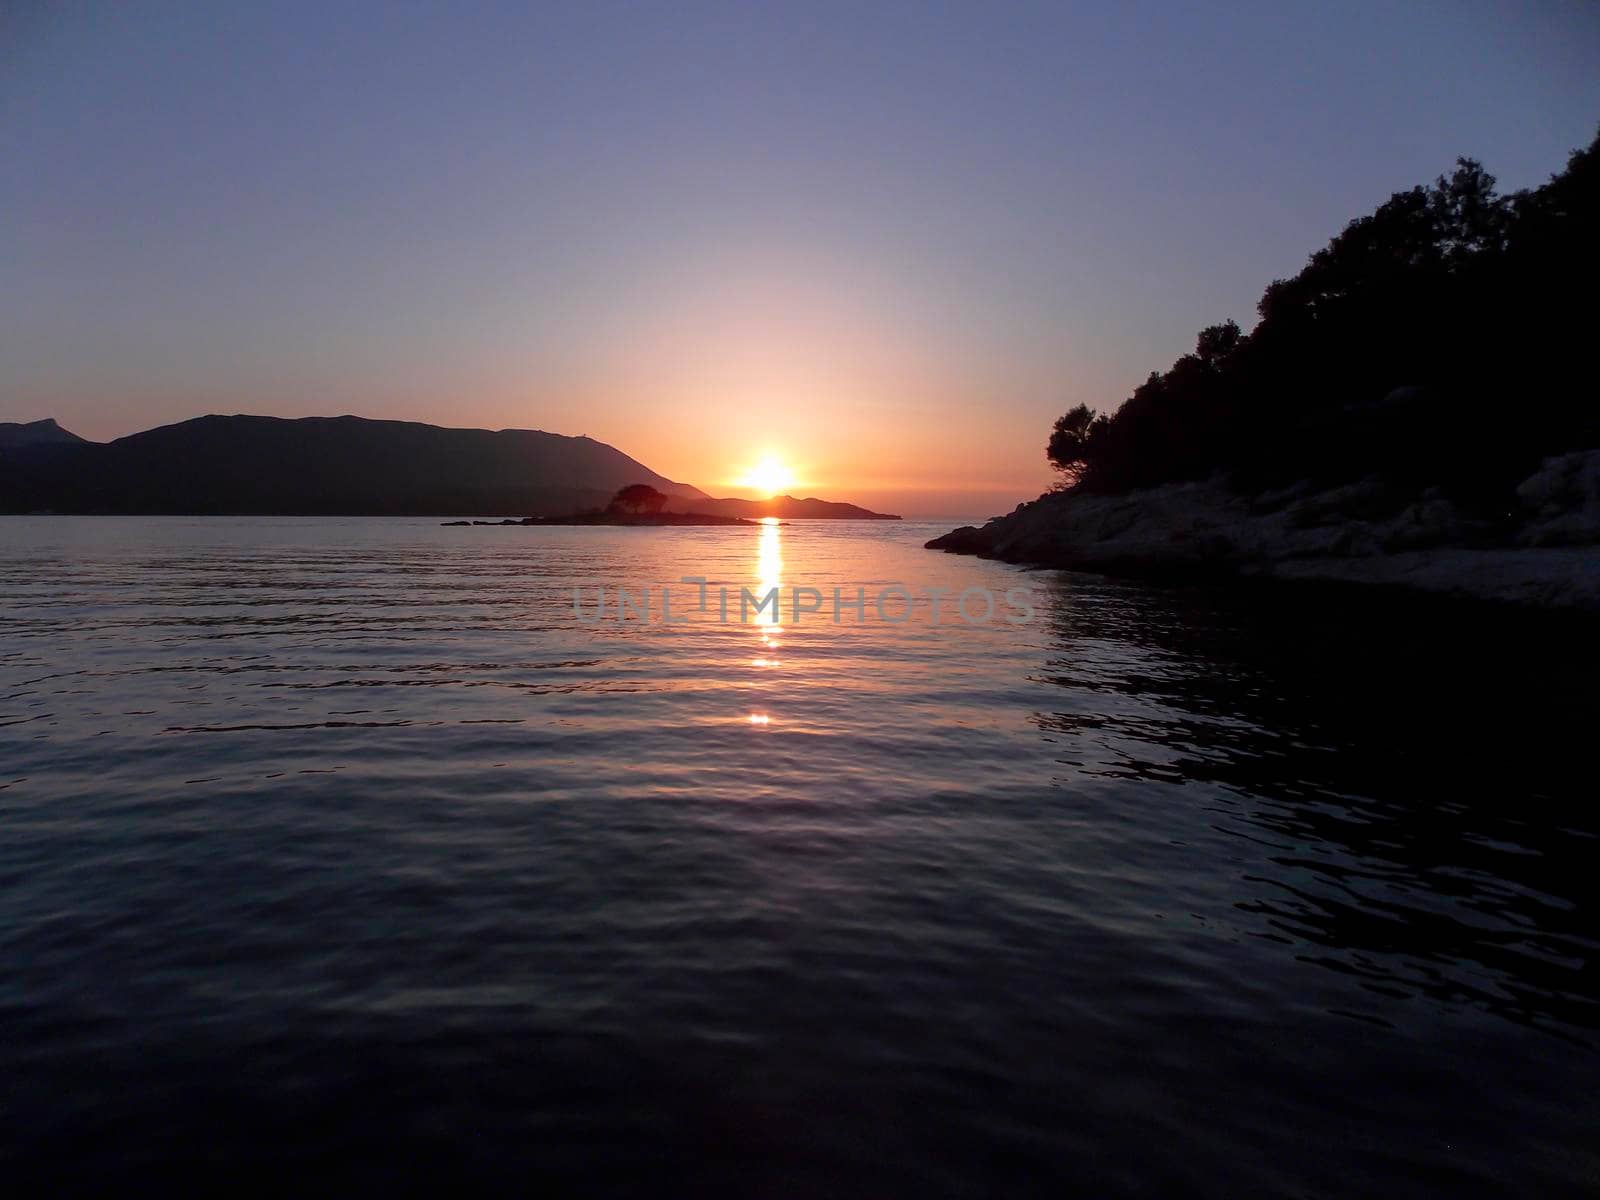 Sunset At Adriatic Sea Croatia  by swissChard7